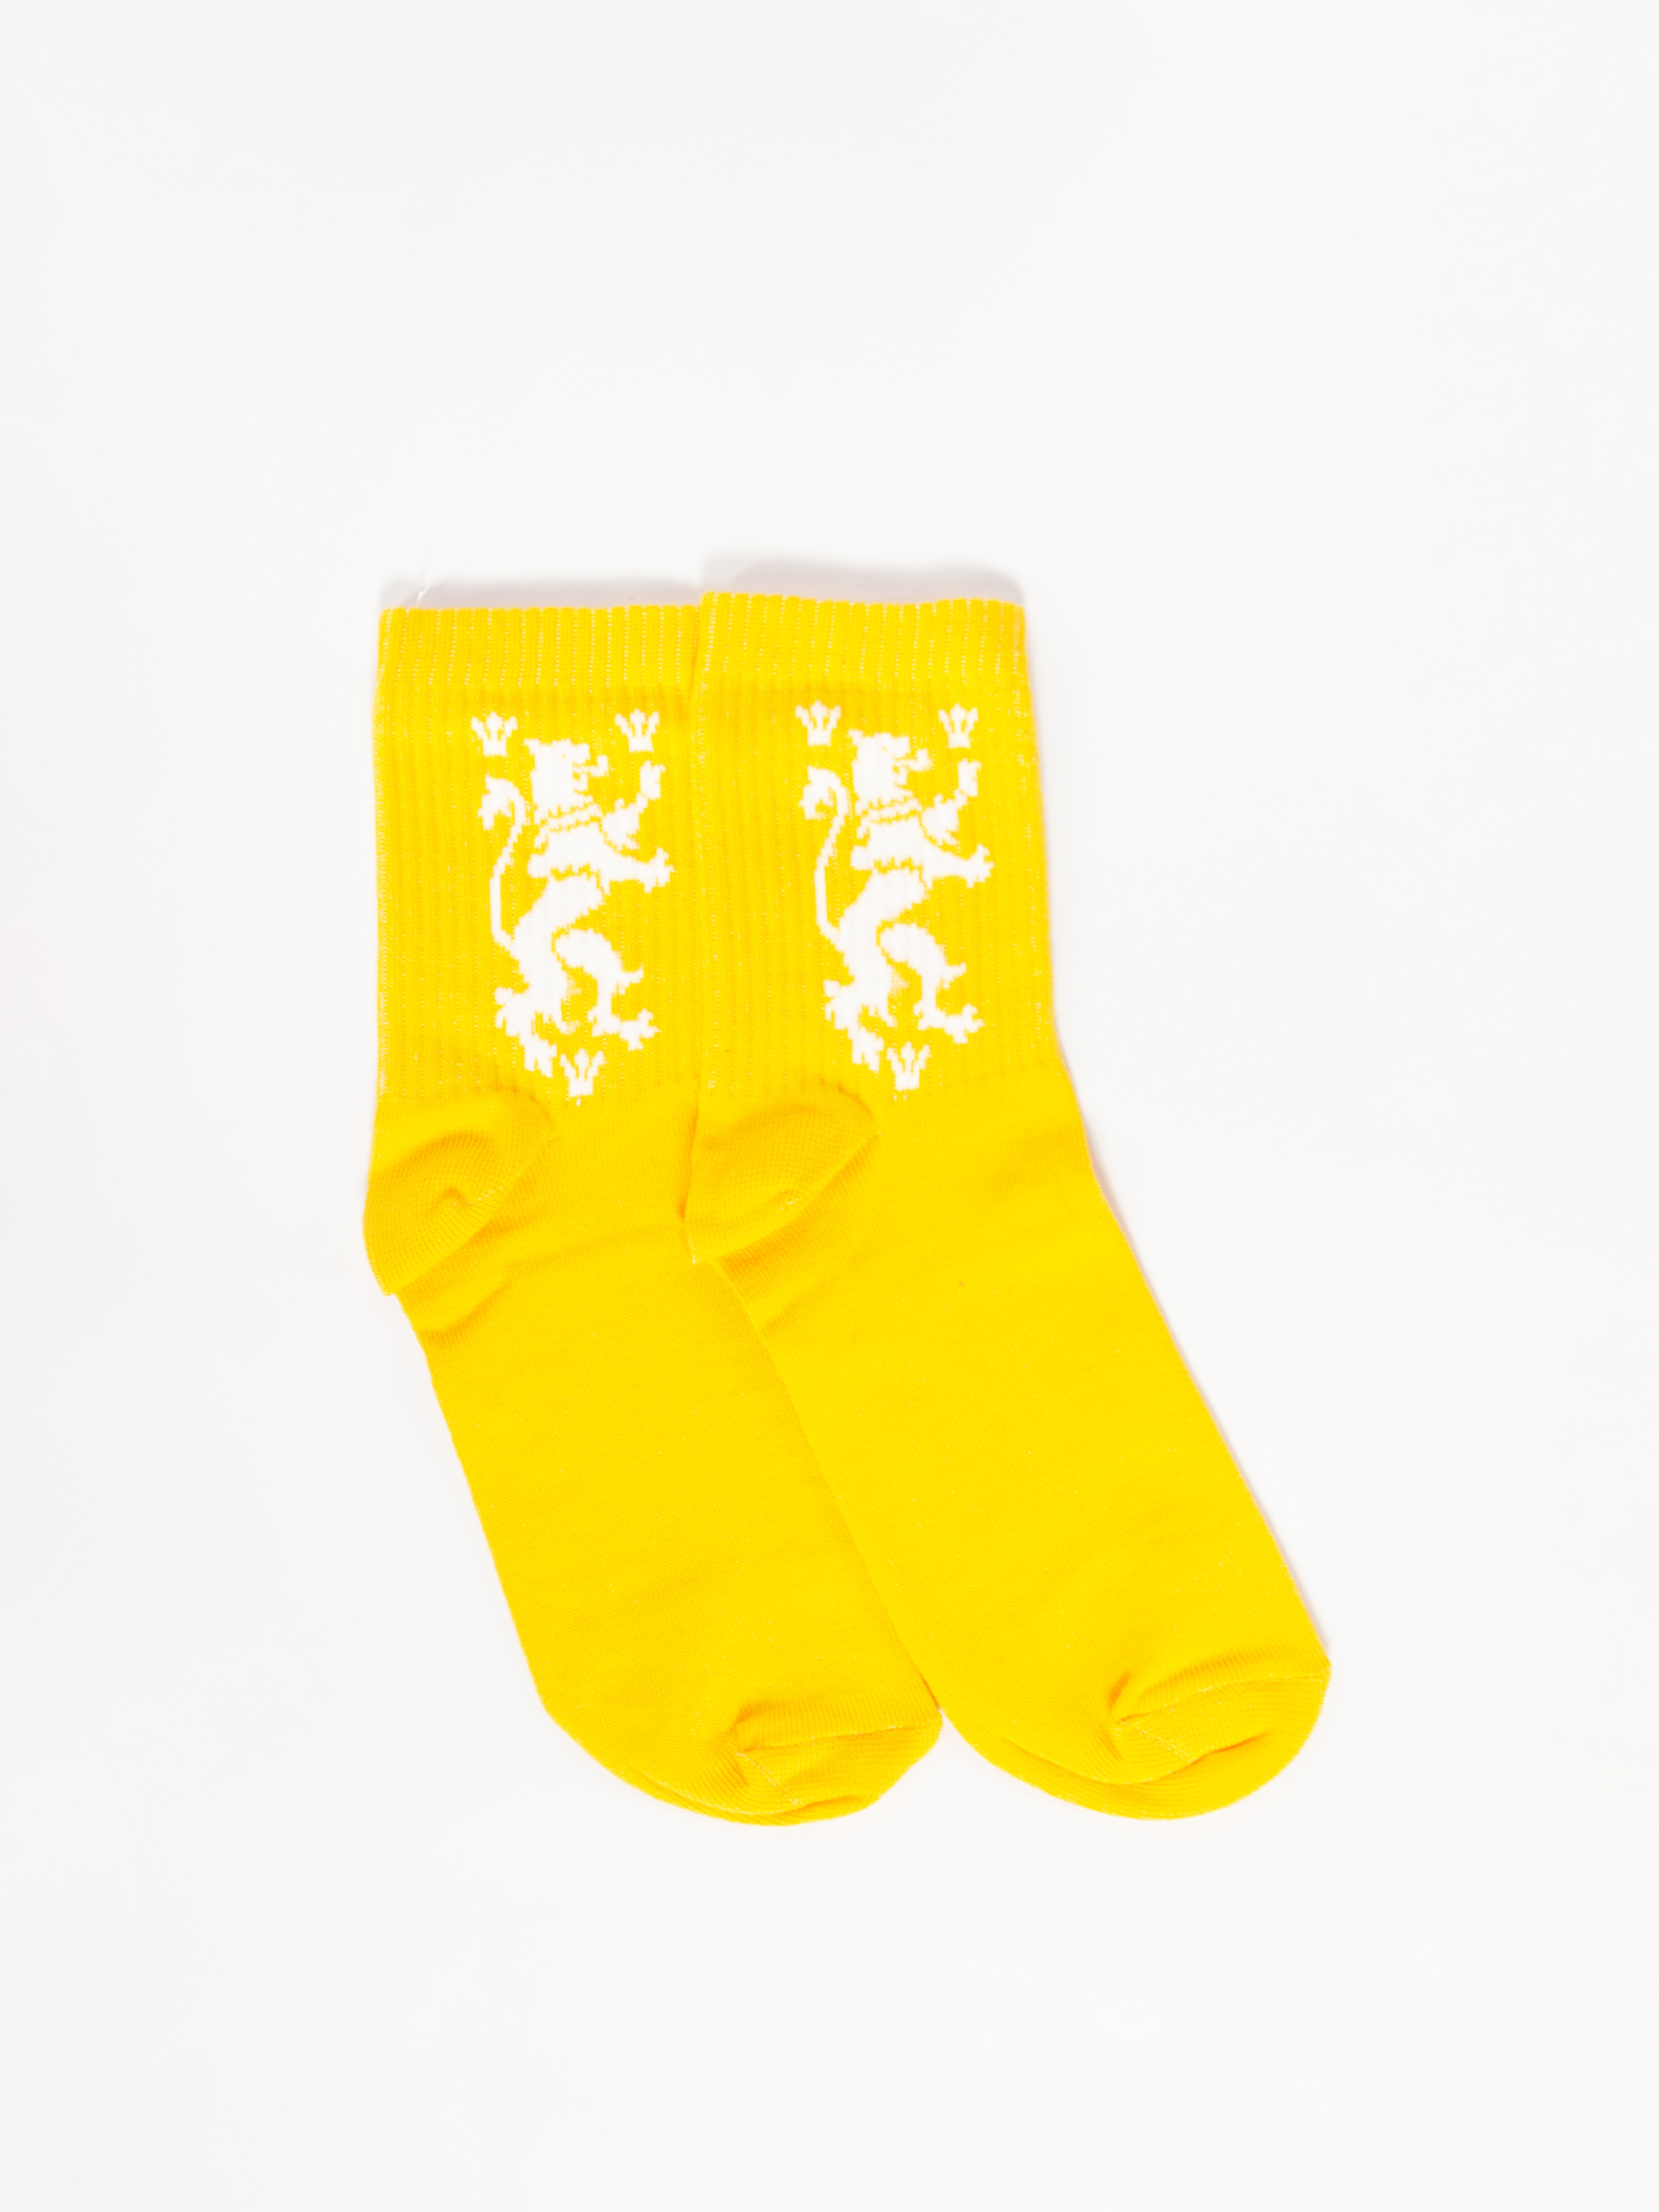 Socks Lion. Color yellow. 2.